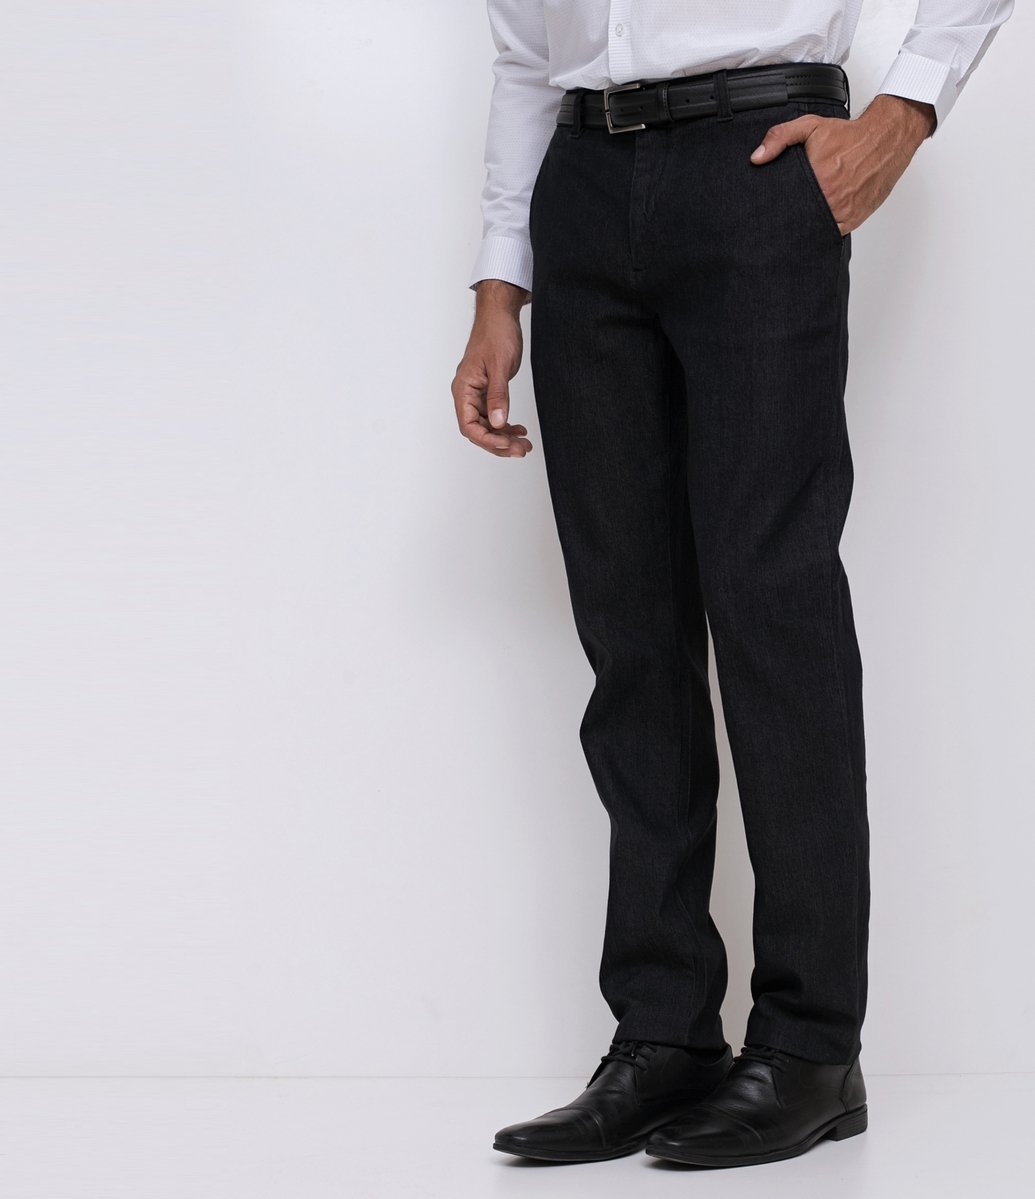 calça preta sarja masculina renner